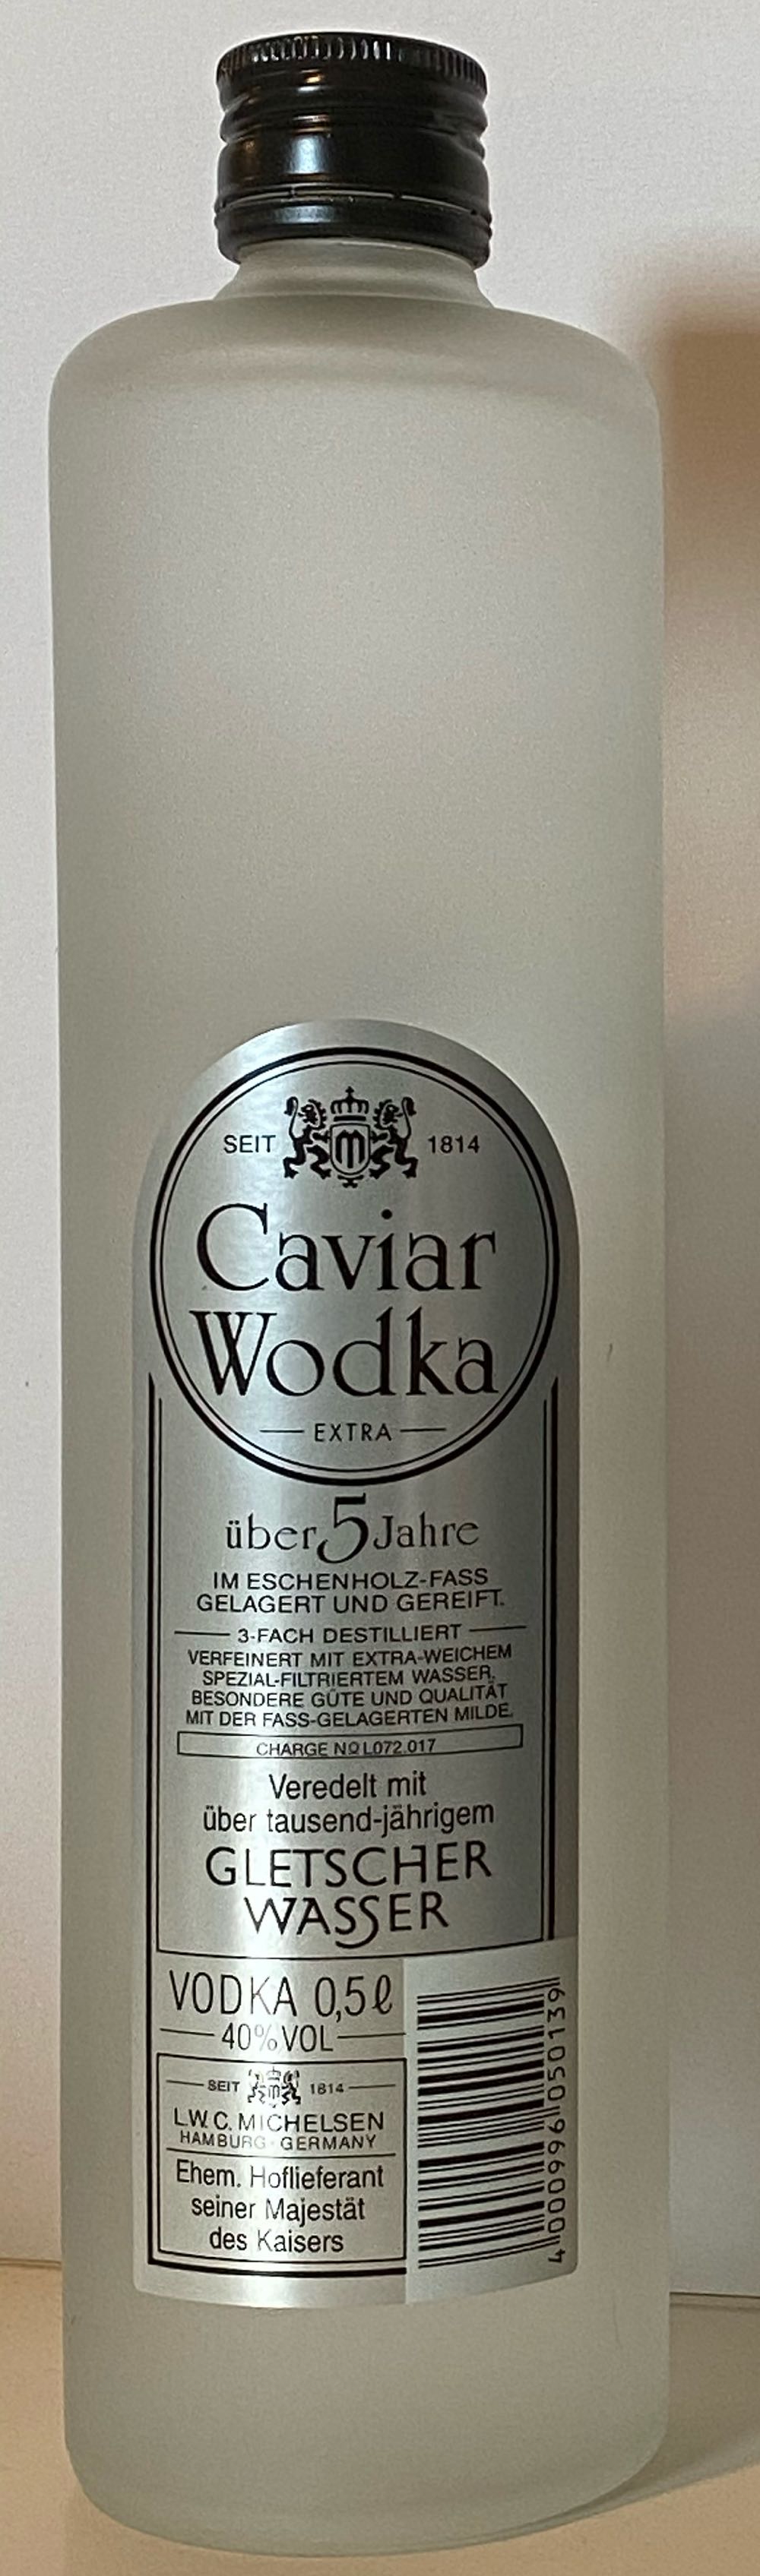 Caviar Wodka 5 Years On Barrel - L.W.C. Michelsen Hamburg (500 mL) alcohol collectible [Barcode 4000996050139] - Main Image 2